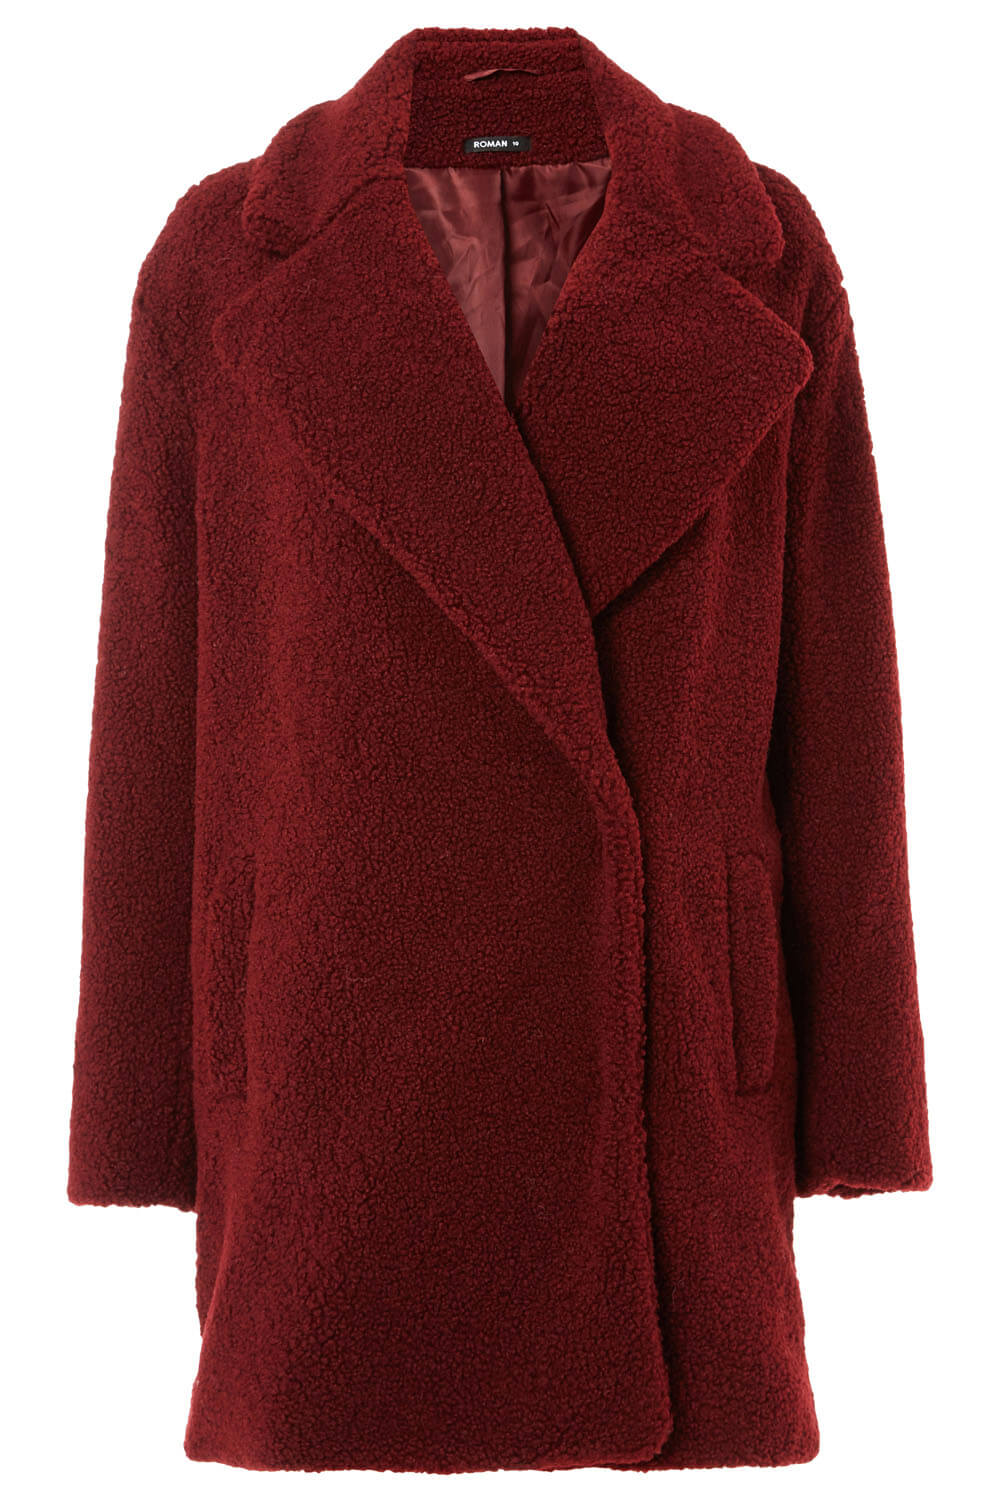 Longline Soft Faux Fur Teddy Coat in Wine - Roman Originals UK